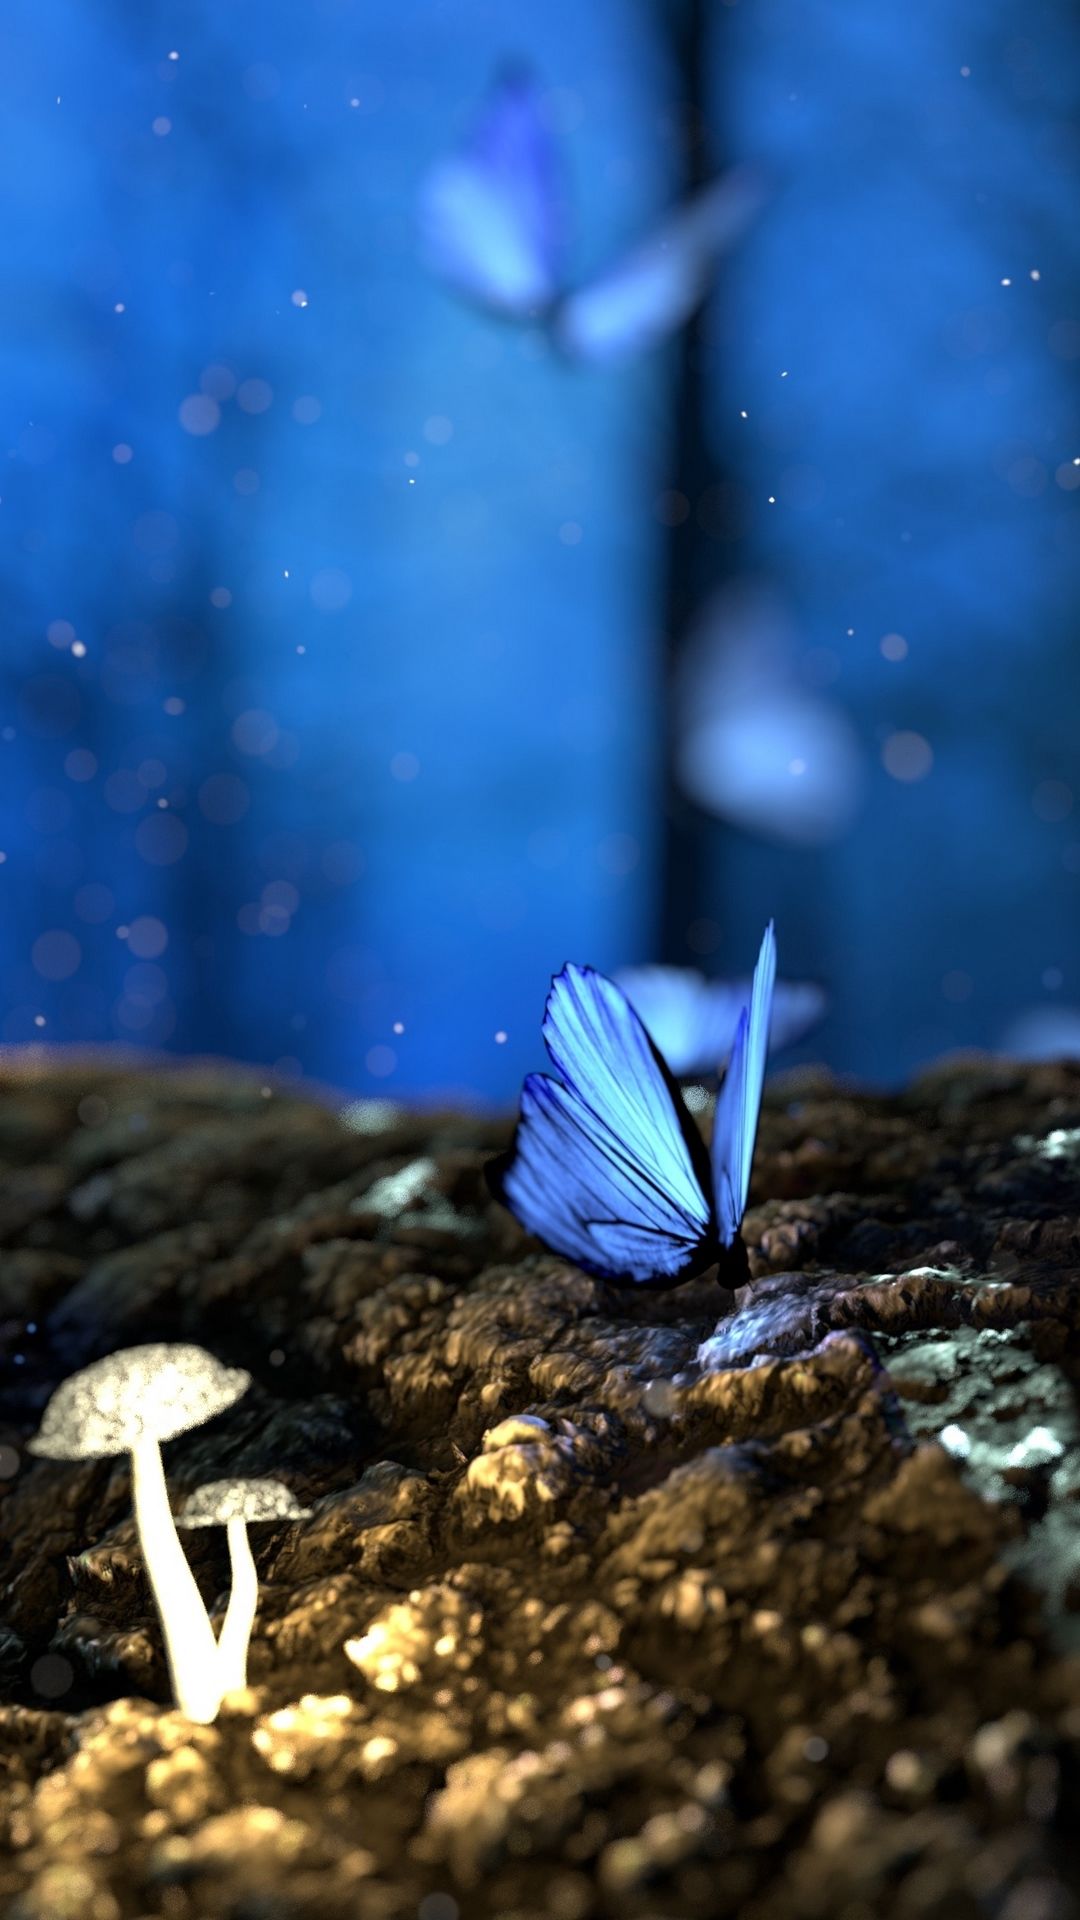 mariposa live wallpaper,azul,naturaleza,mariposa,insecto,polillas y mariposas